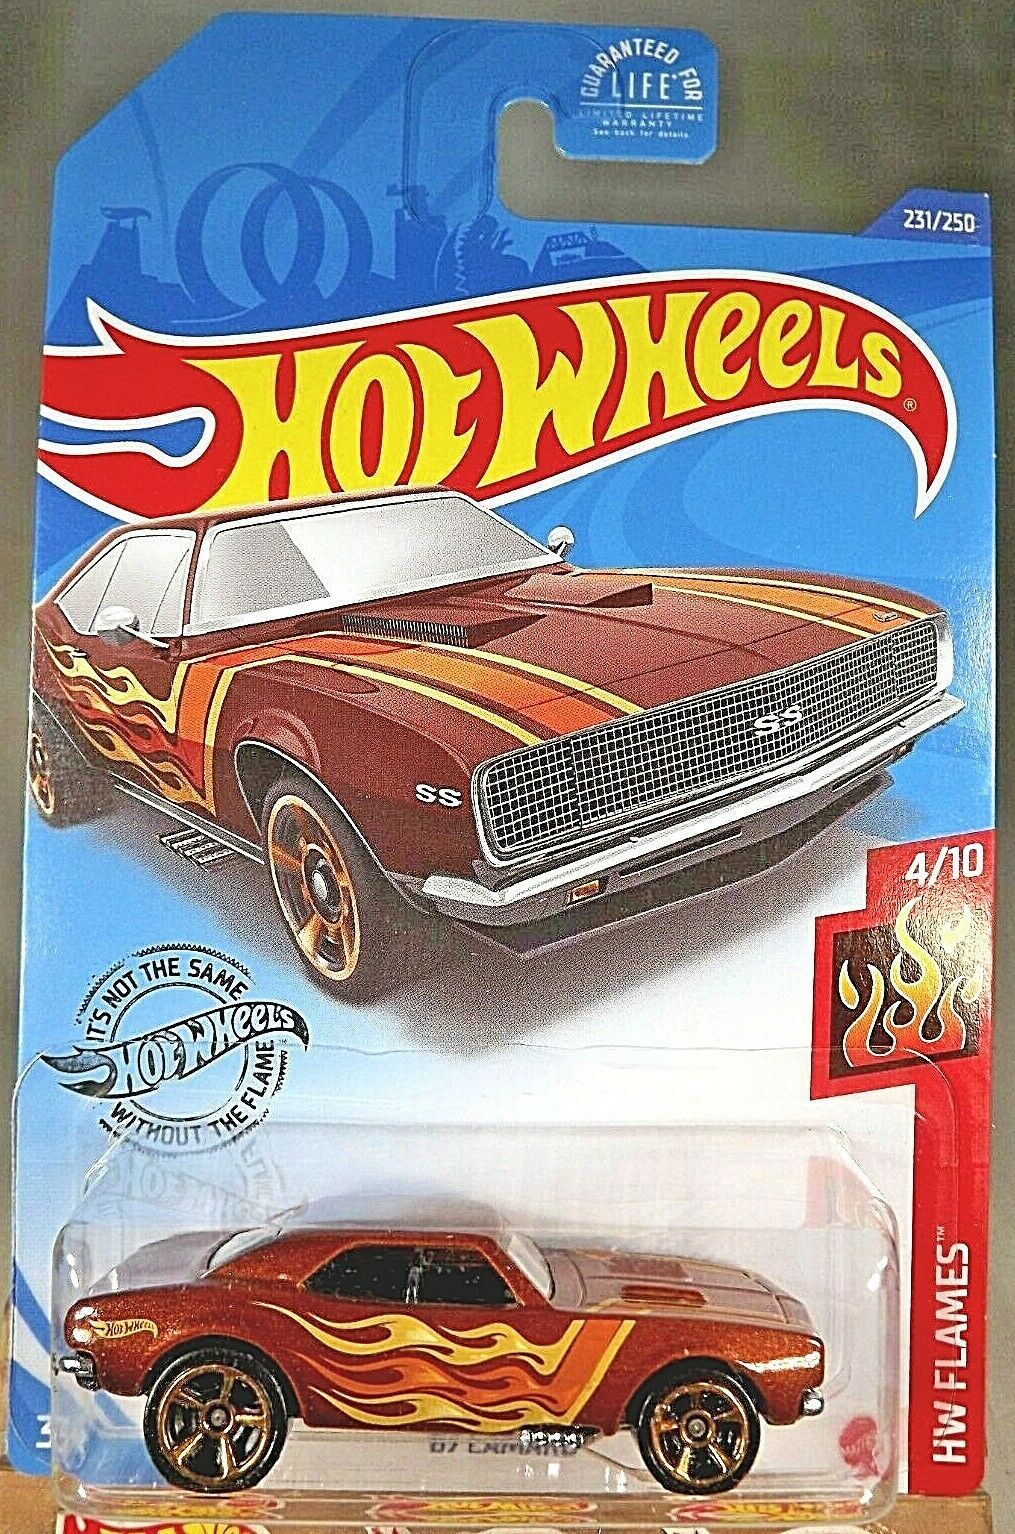 2020 Hot Wheels #231 HW Flames 4/10 '67 CAMARO Brown w/Gold MC5 Spoke Wheels